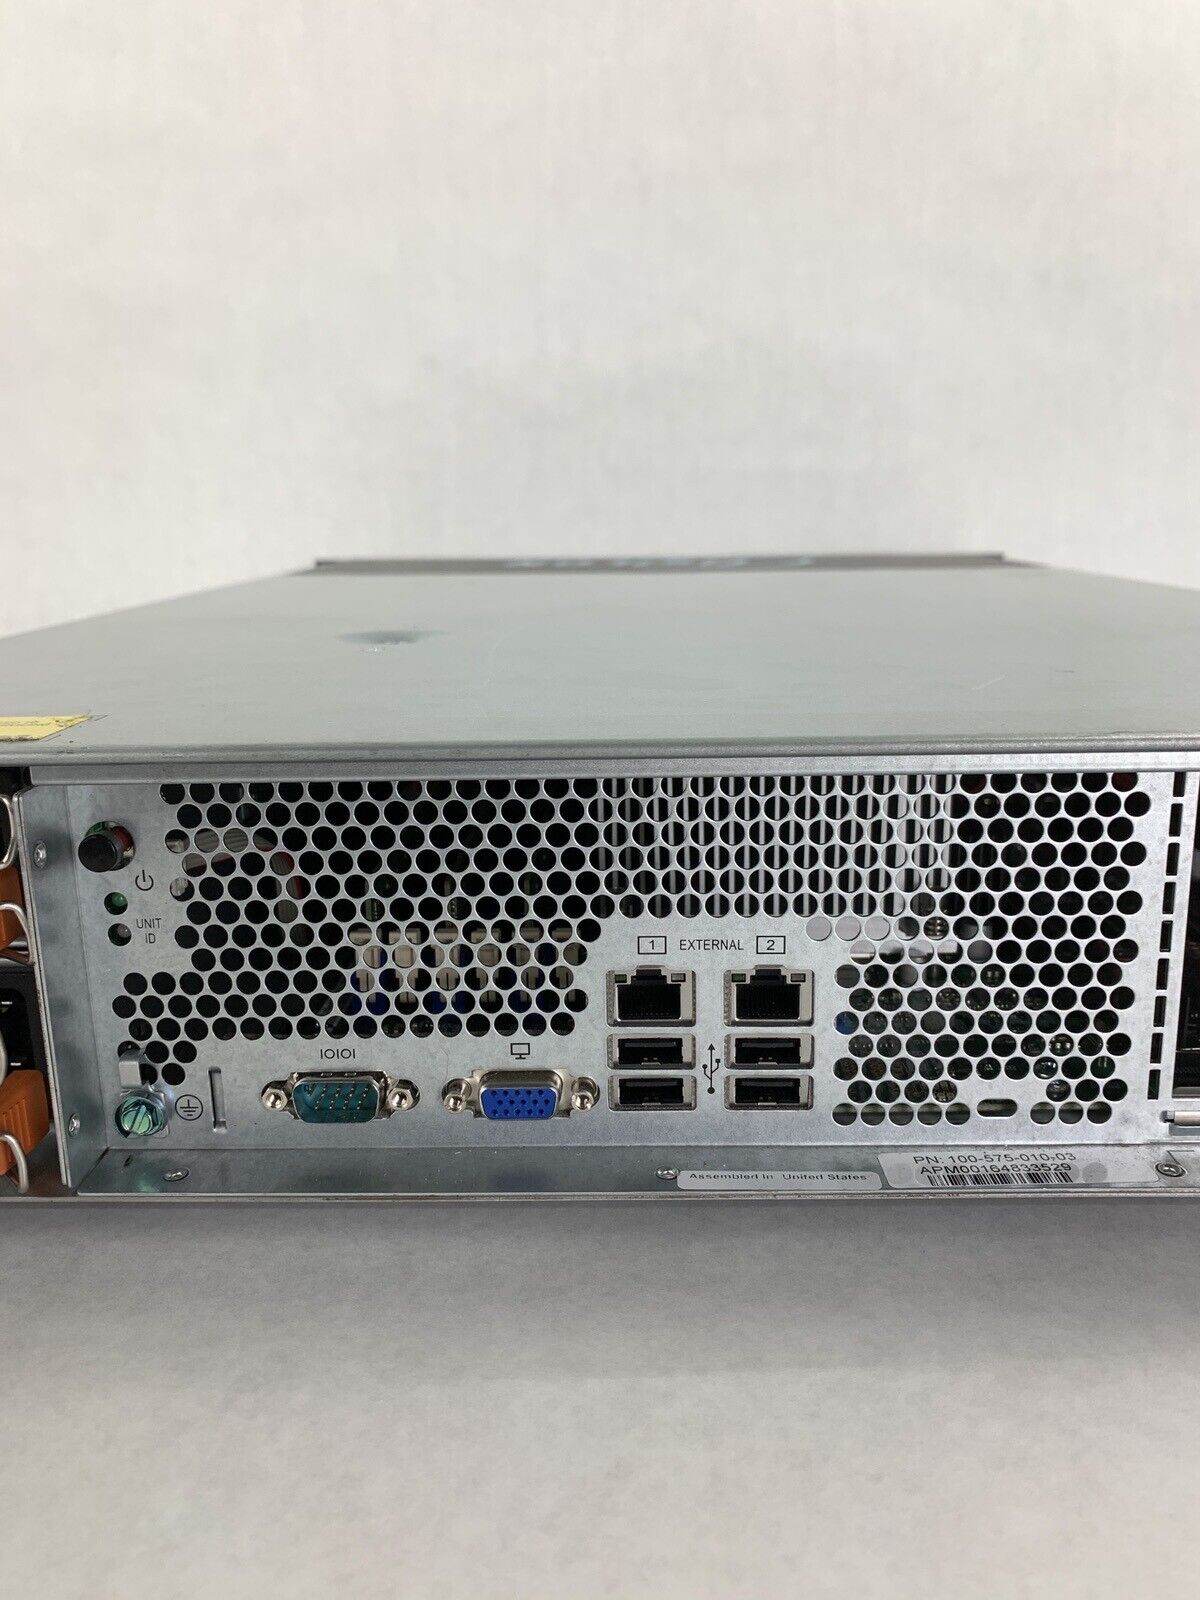 EMC Isilon X210 Server S14FP E5-2407V2 2.4 GHz 24 GB Ram No HDD No OS